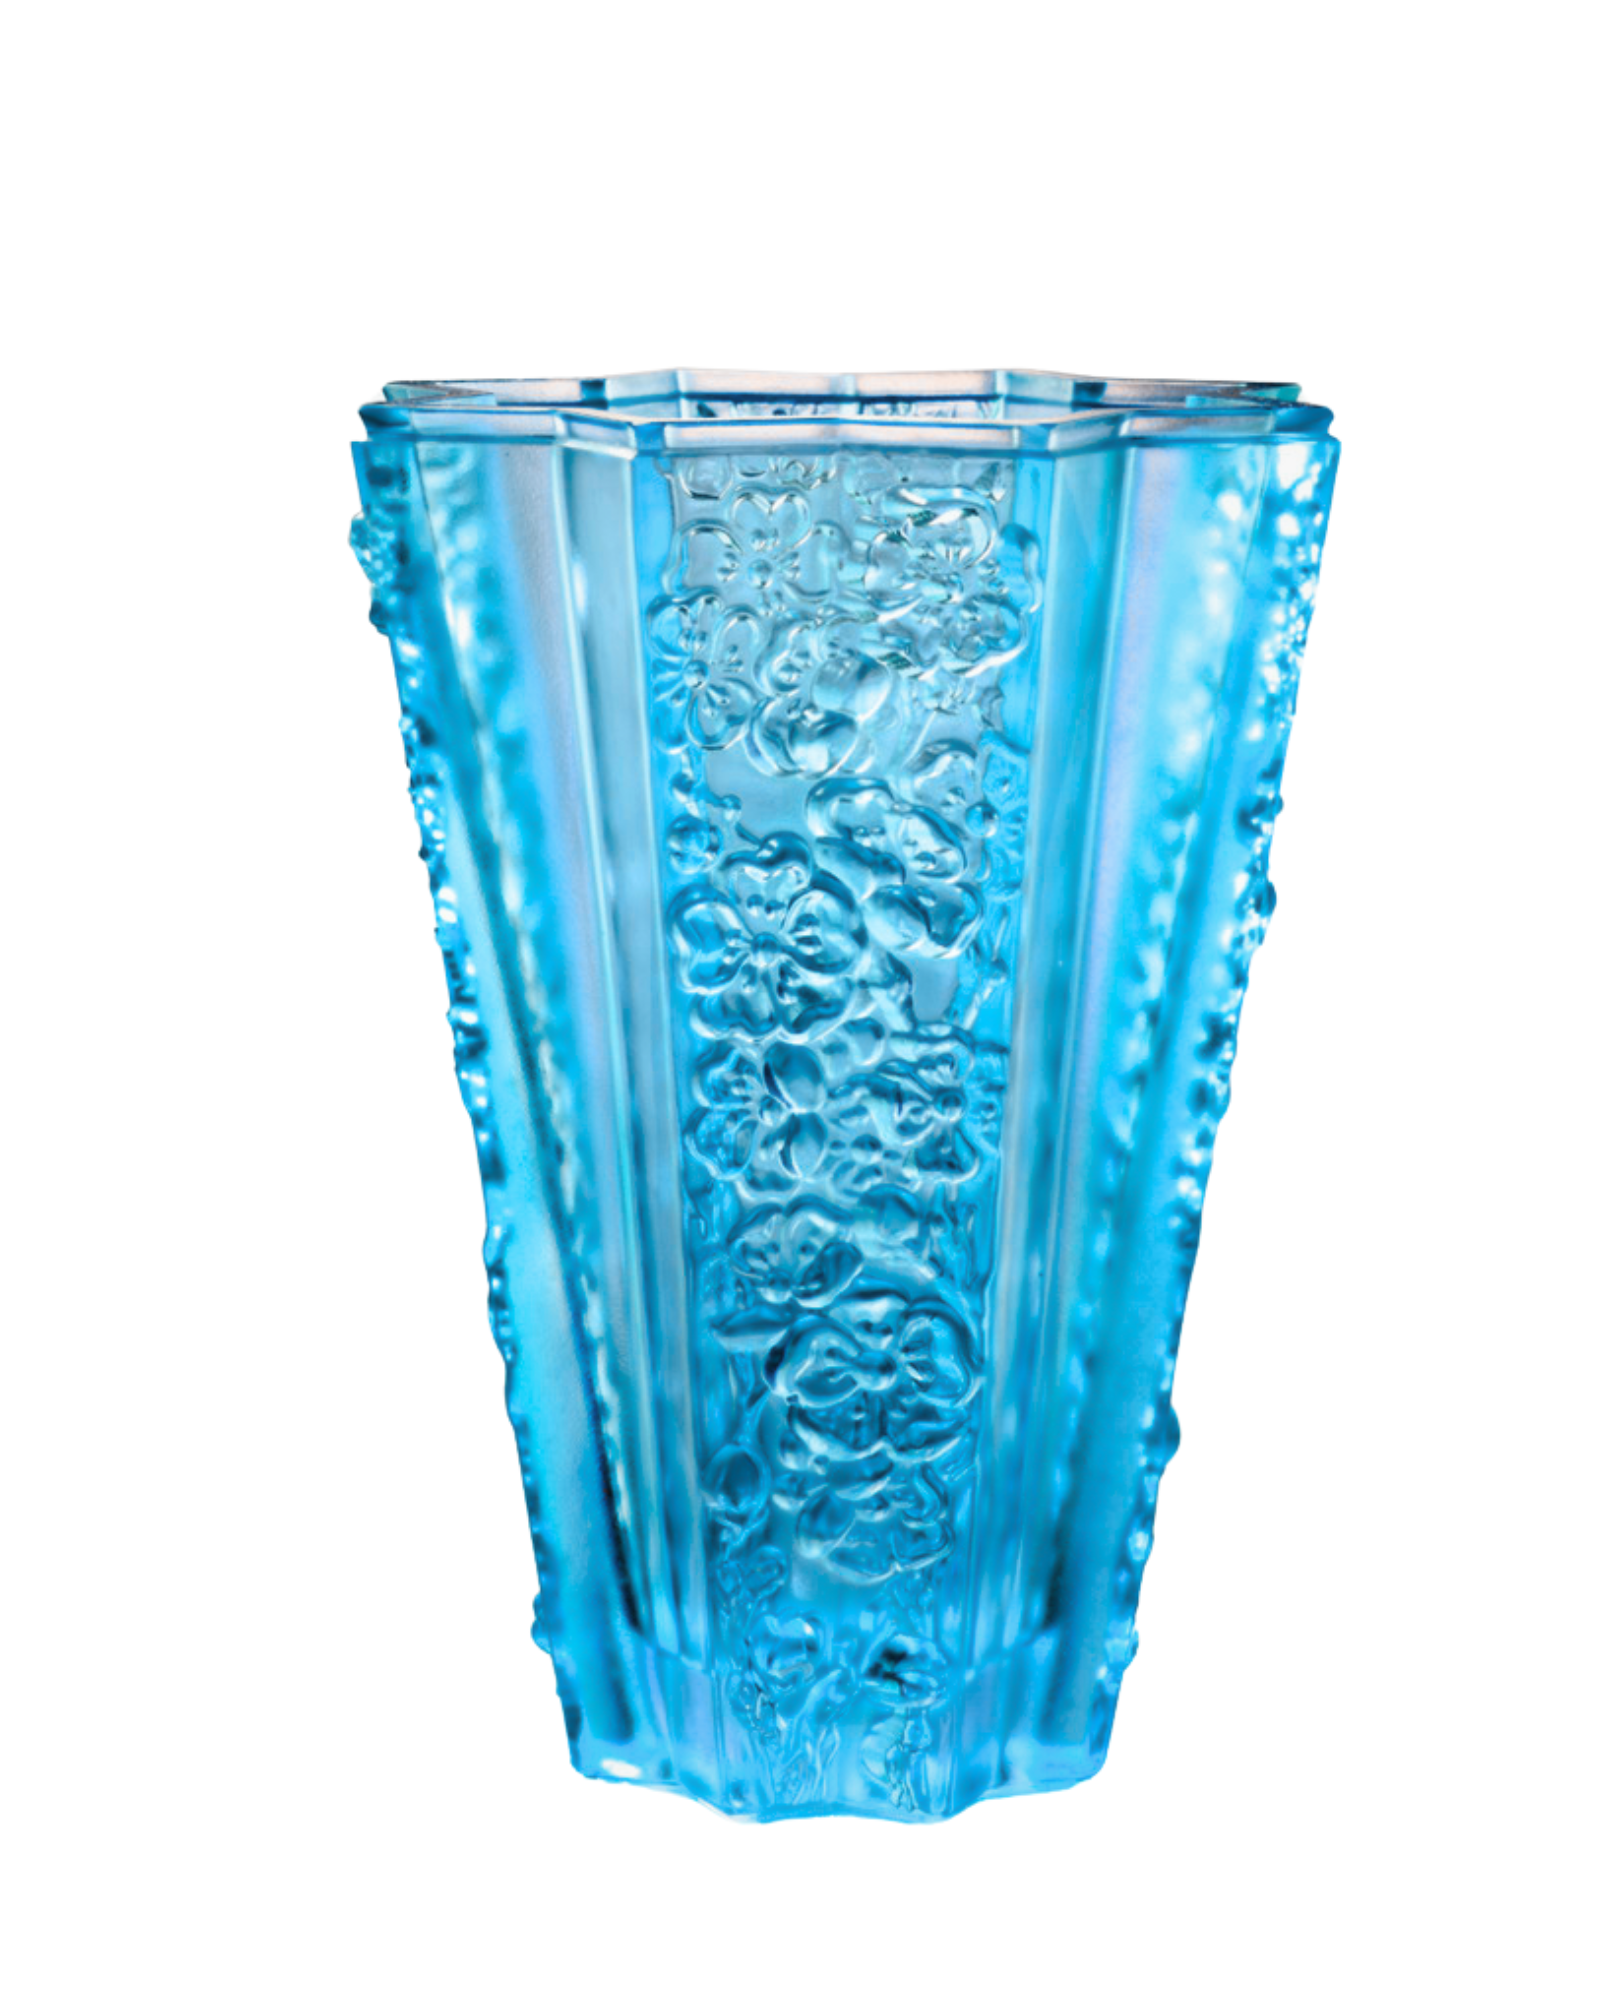 LIULI Crystal Art Crystal Floral Vase, "Wondrous Plum Blossom"